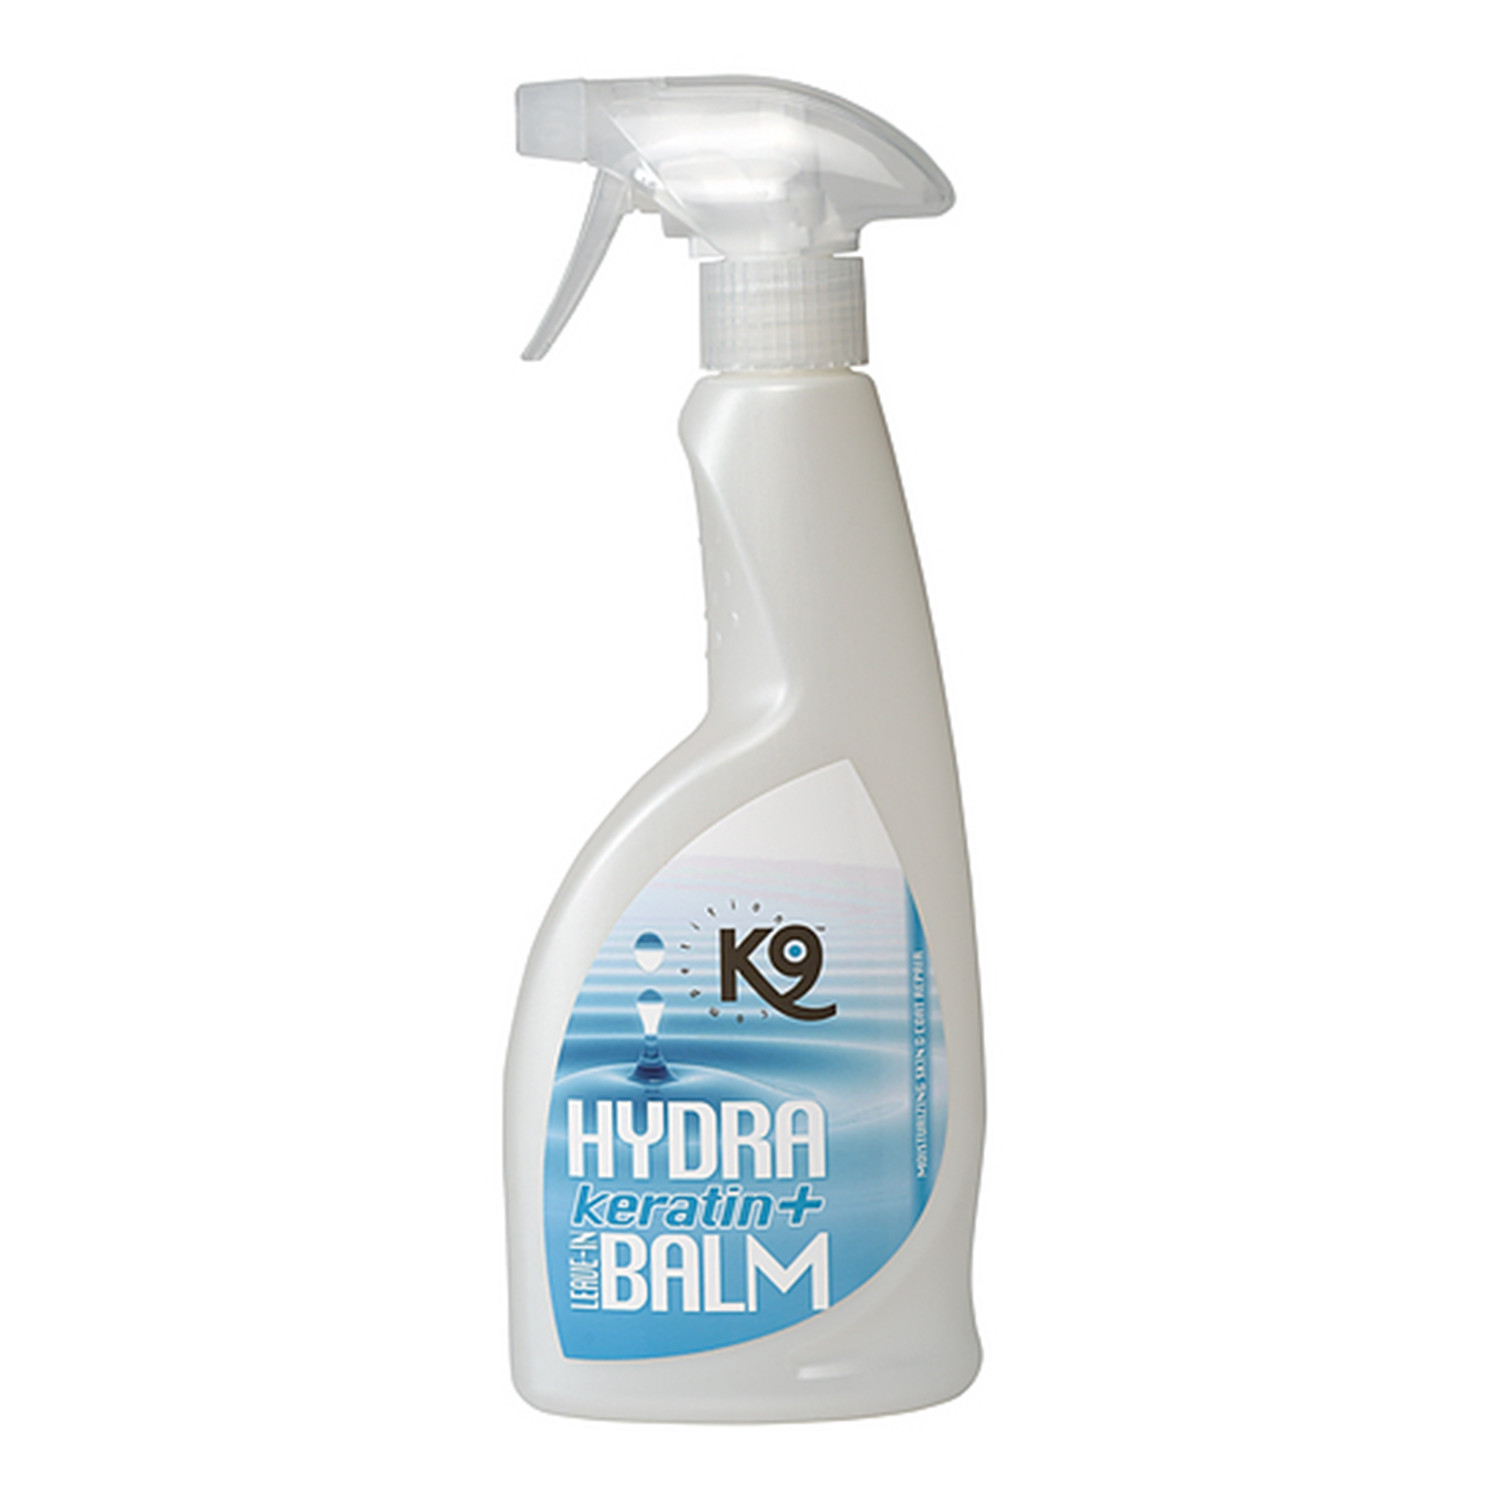 Hydra balsam keratin + 500 ml